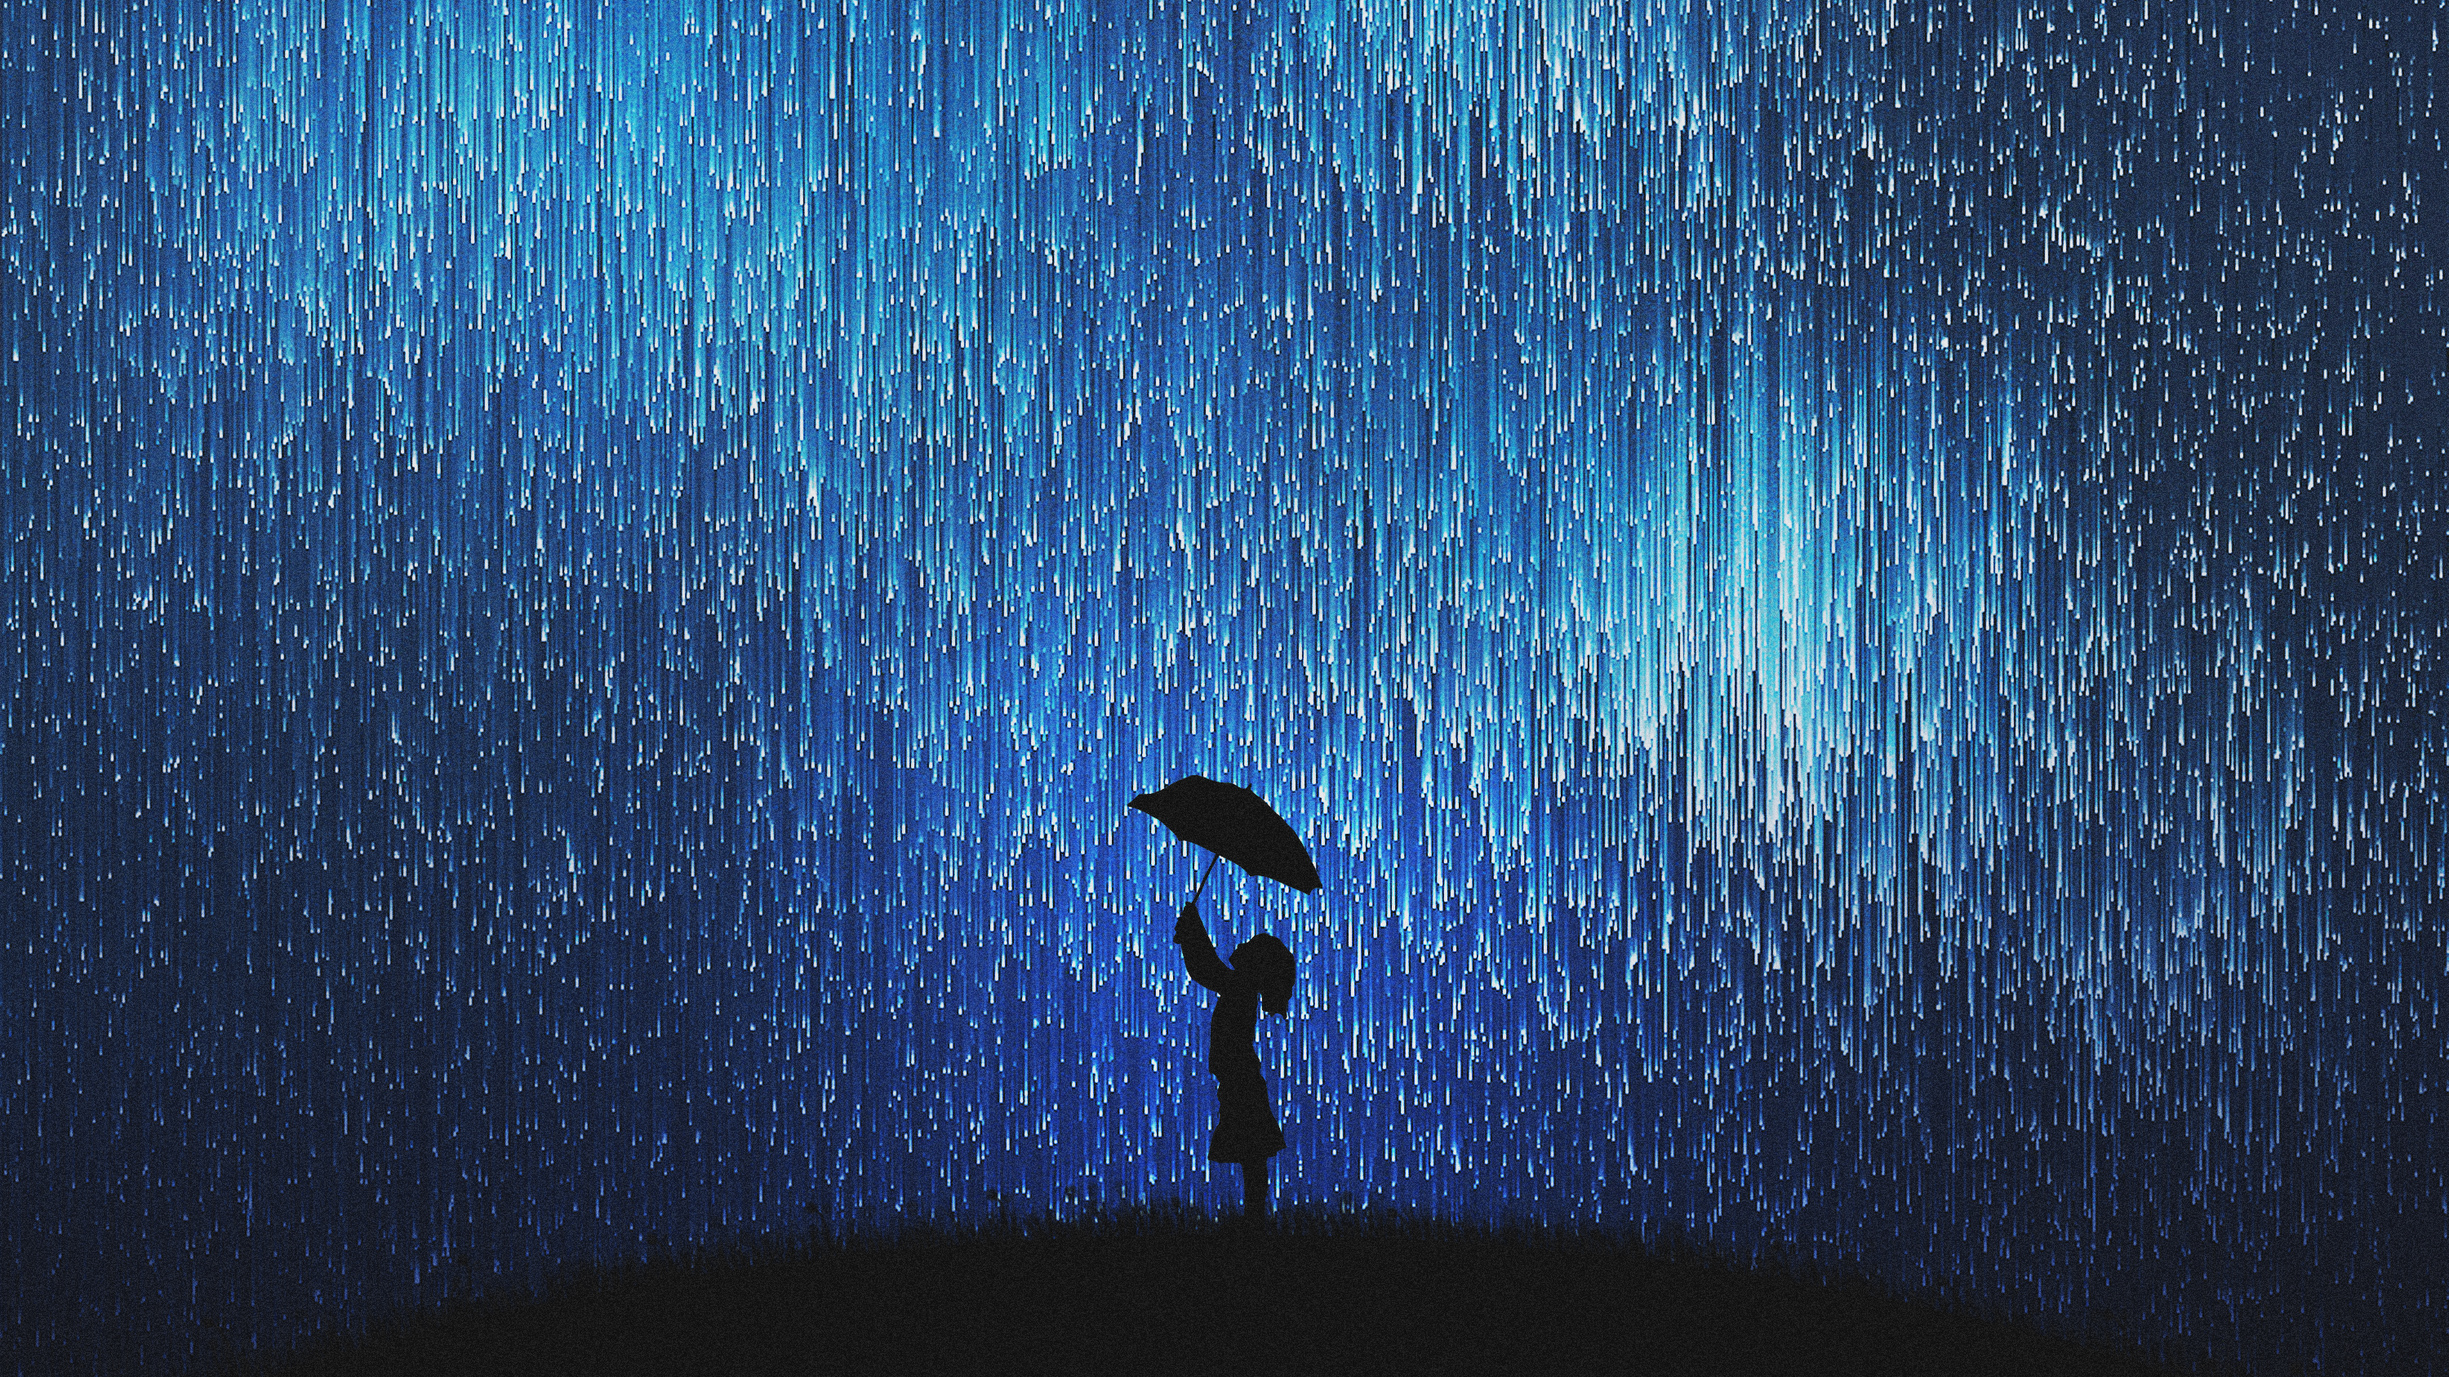 Rain Of Stars Little Girl With Umbrella, HD Artist, 4k Wallpapers